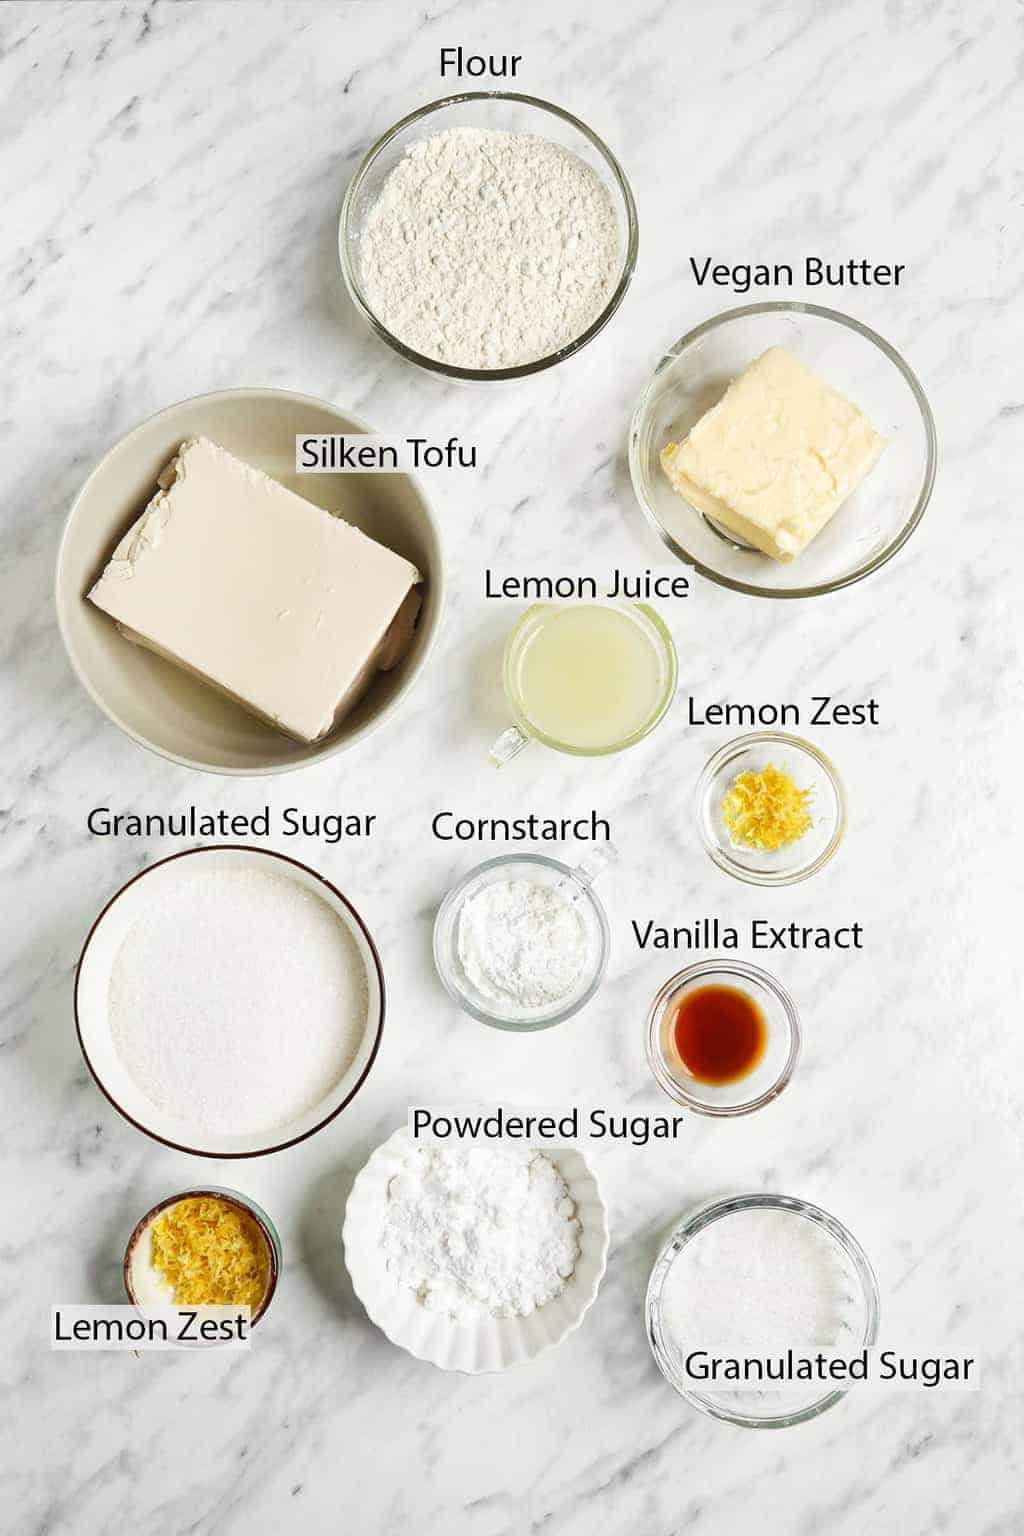 sugar, lemon juice and zest, vanilla, flour, cornstarch, tofu, vegan butter on white surface